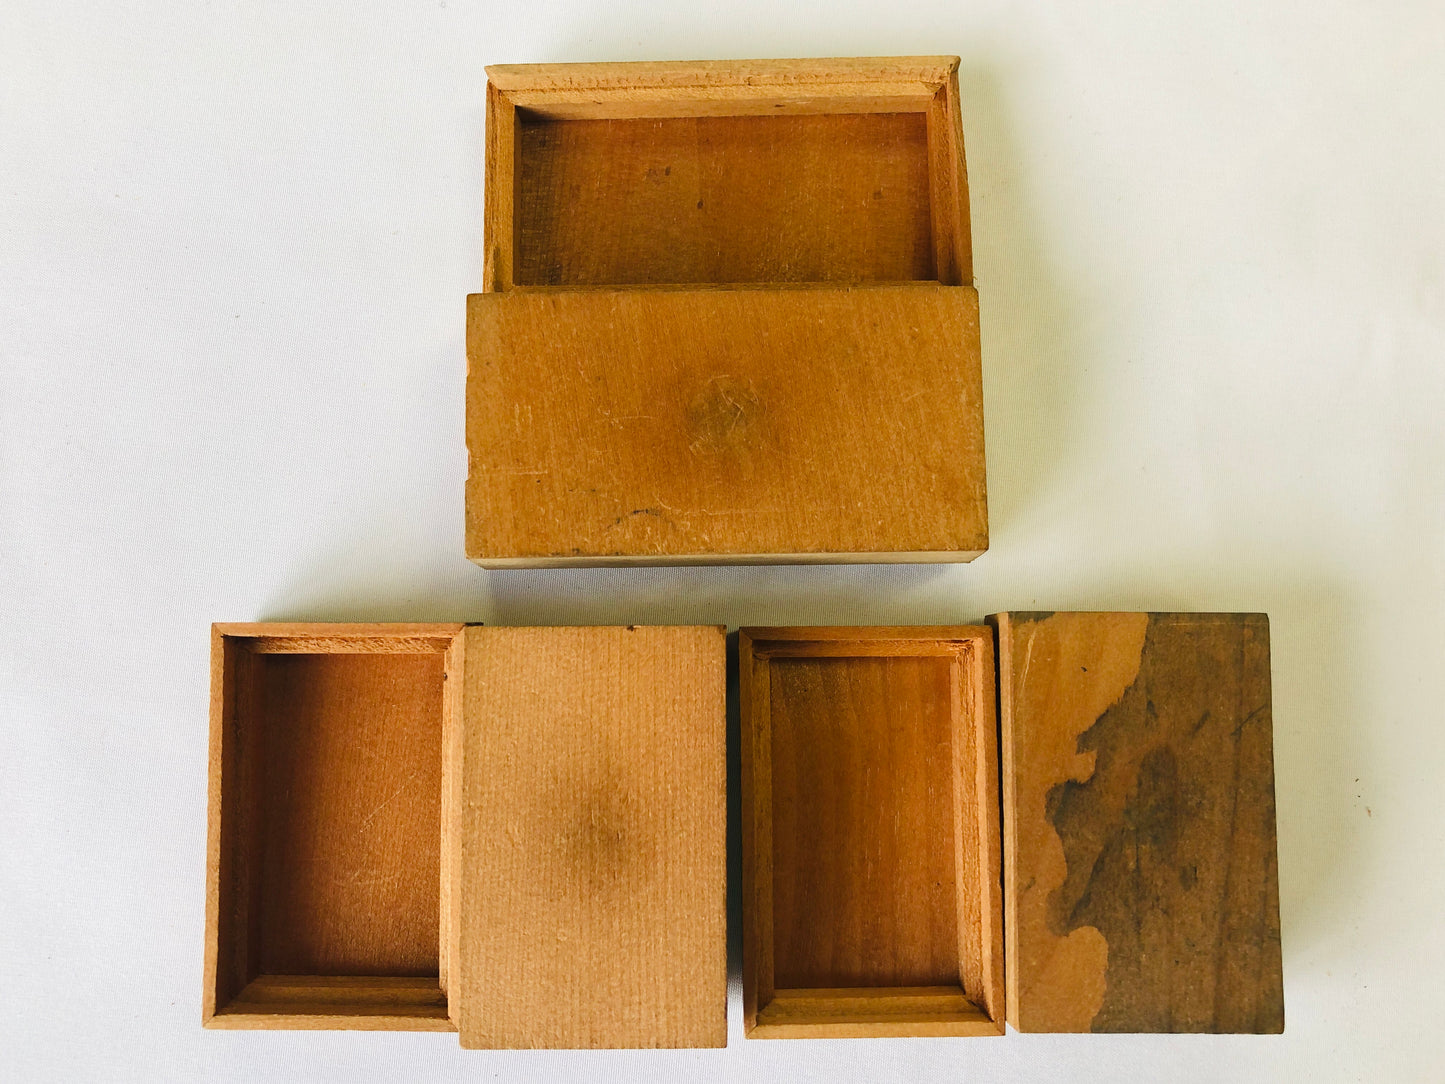 Y4614 BOX Hakone woodwork nesting case container Japan antique vintage storage